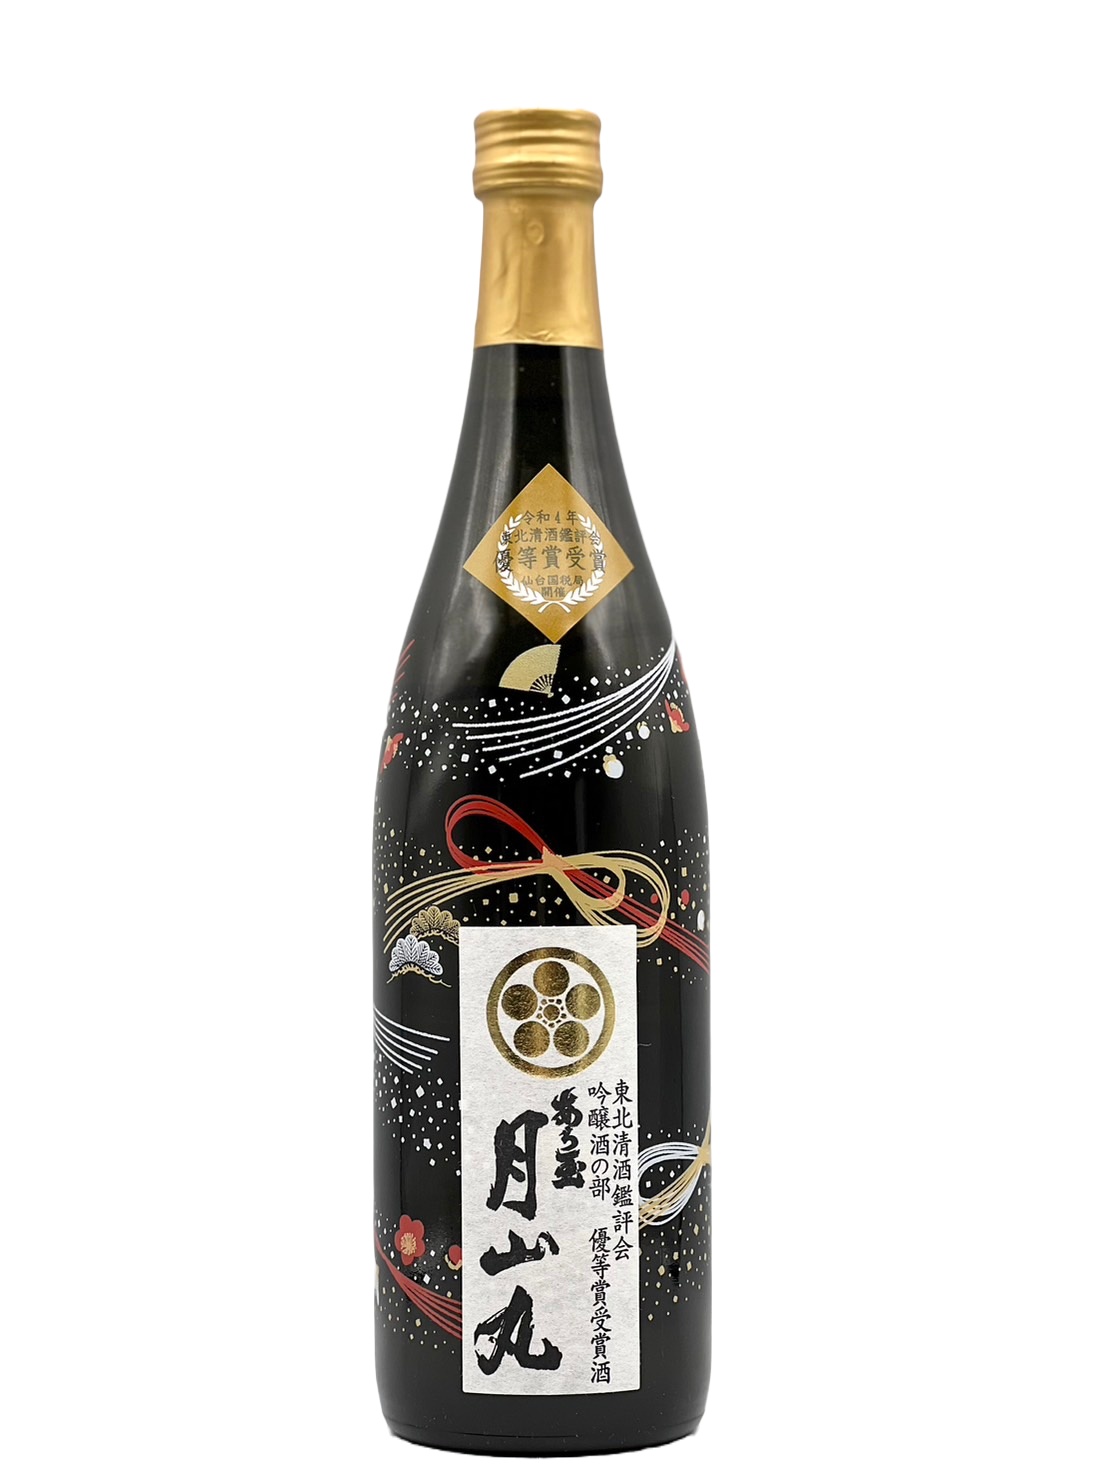 Aratama Daiginjo Tsukiyama Maru Tohoku Refined Sake Appraisal Award Winning Sake